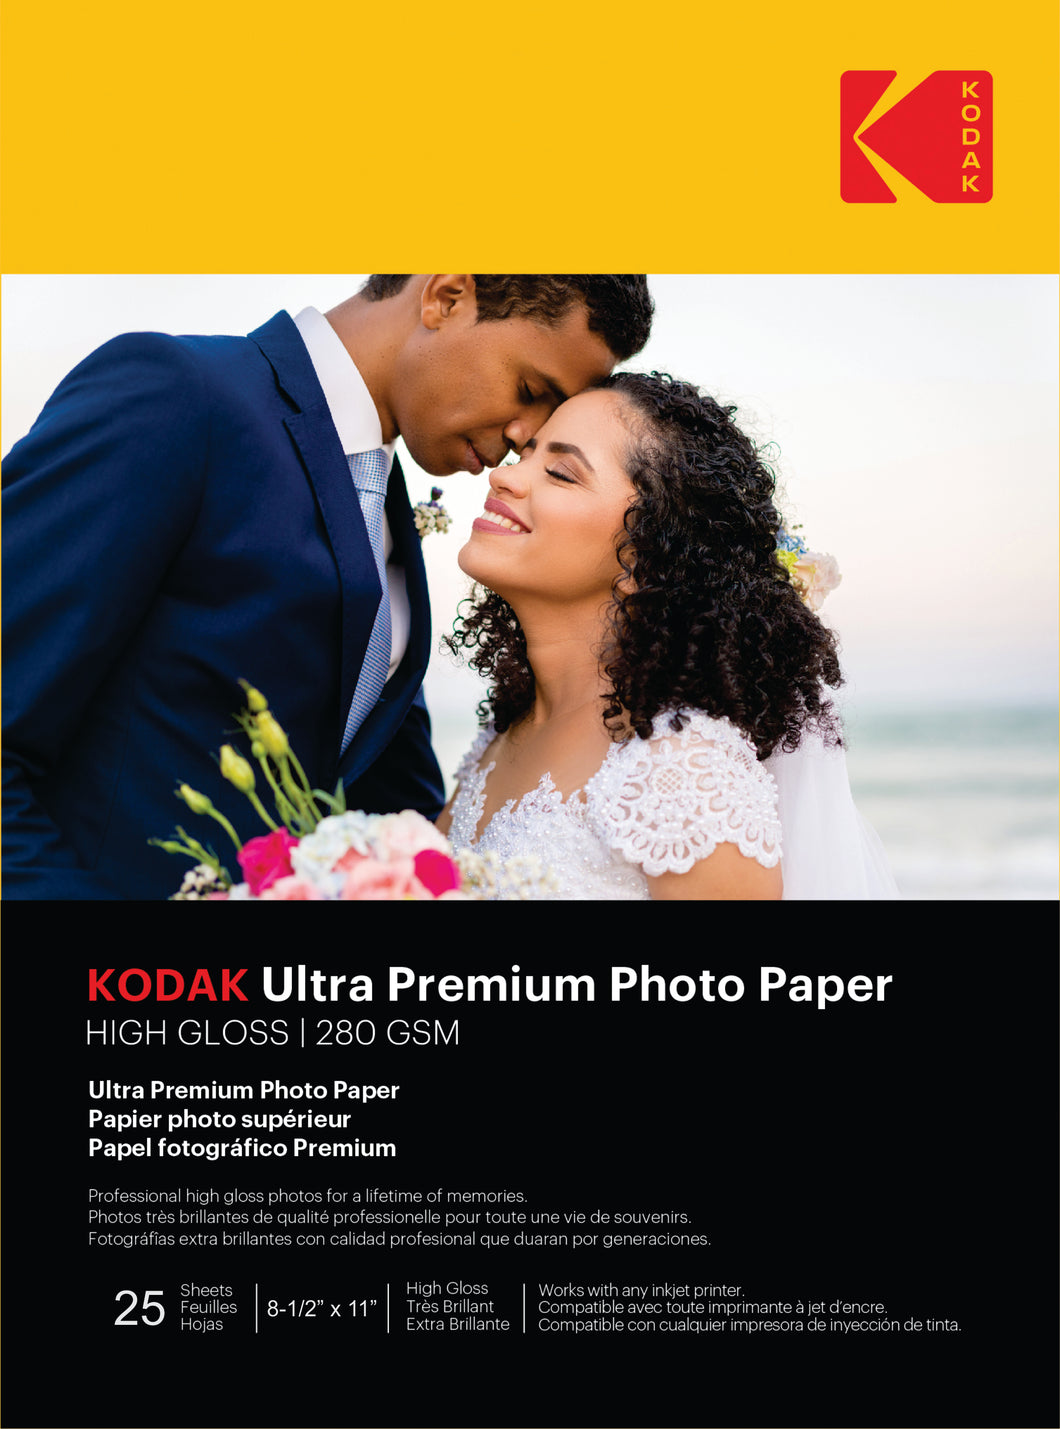 KODAK Ultra Premium Photo Paper High Gloss - 8.5 x 11 inches - 25 Sheets - diyphotopaper